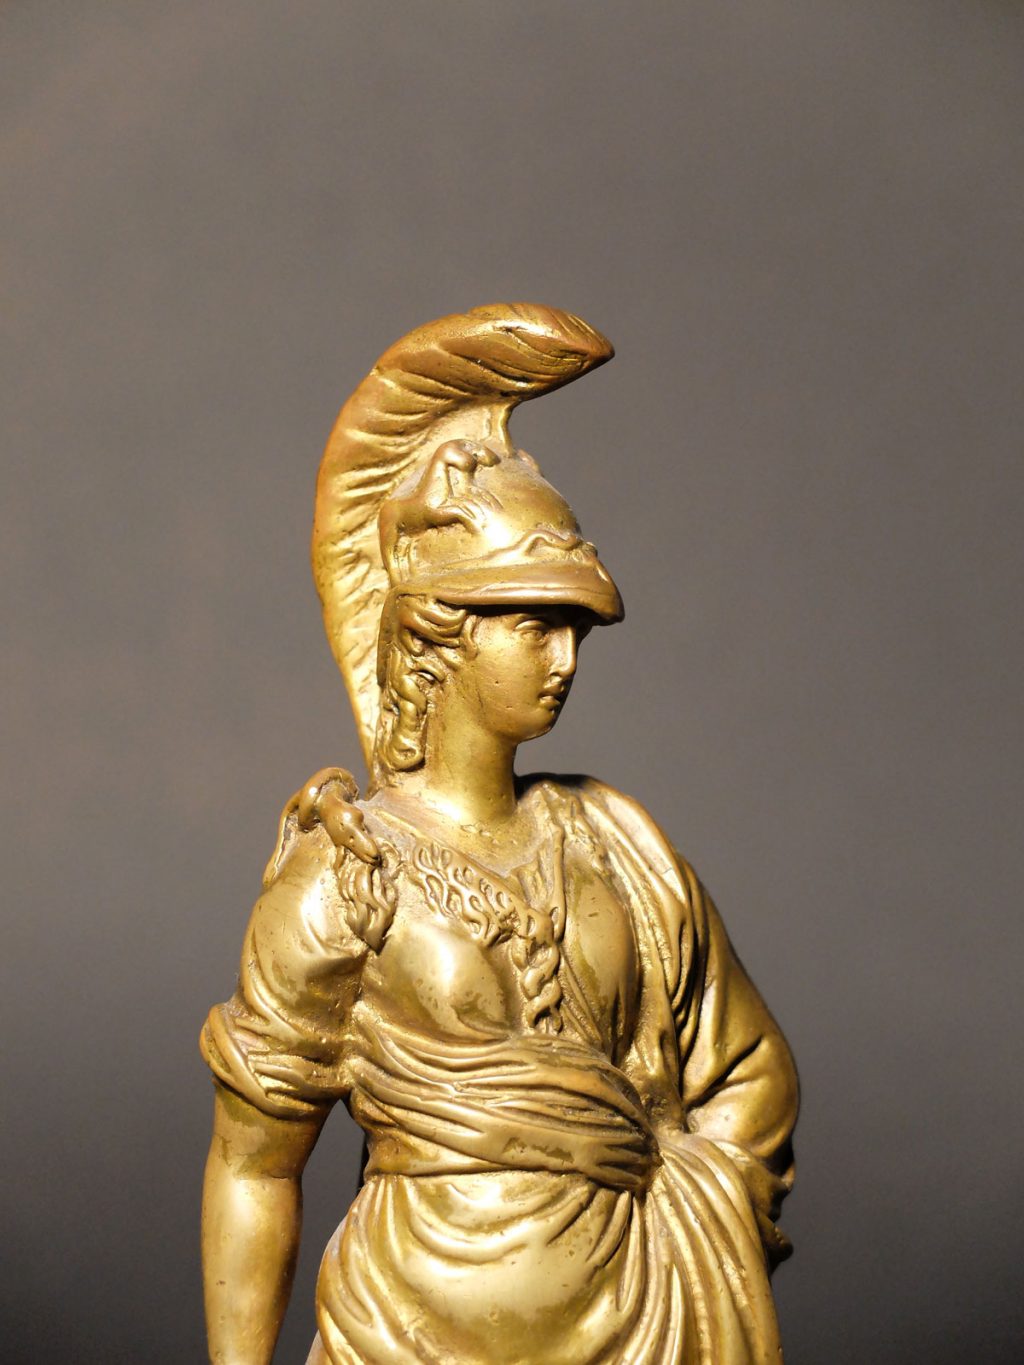 Paire de bronzes italiens